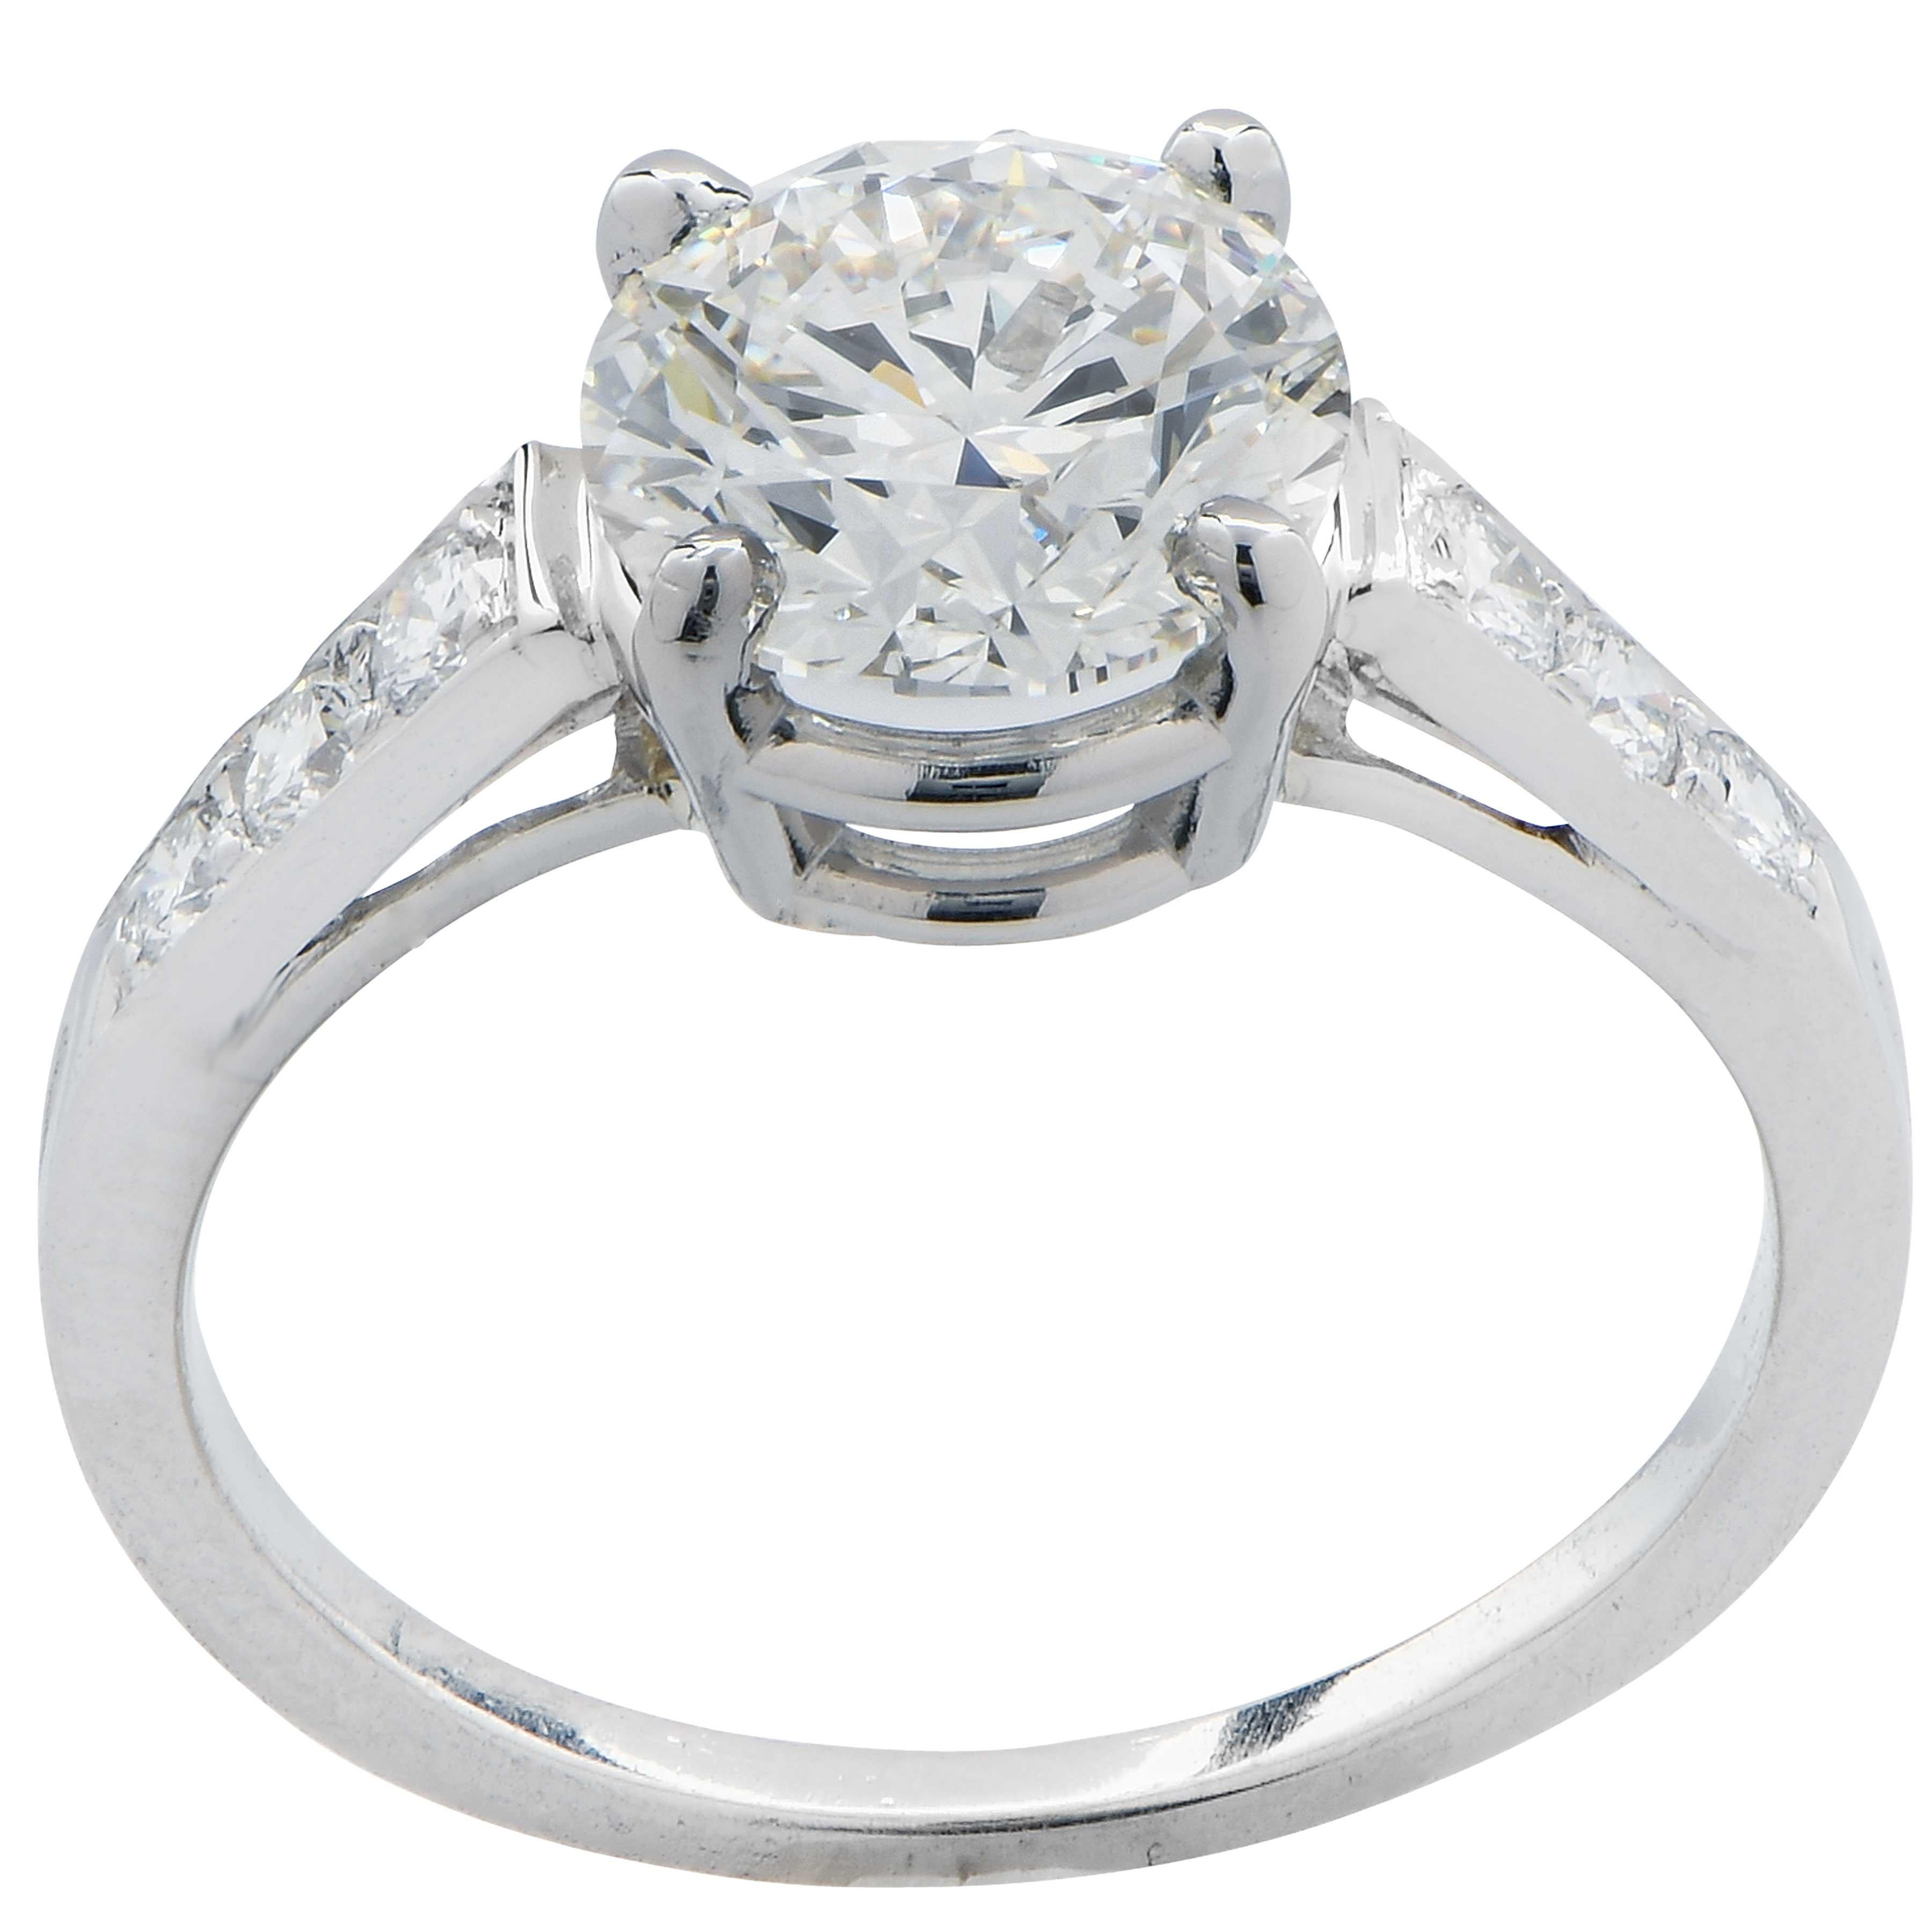 Modern 2.13 Carat GIA H / VVS2 Round Brilliant Cut Diamond on Platinum Engagement Ring